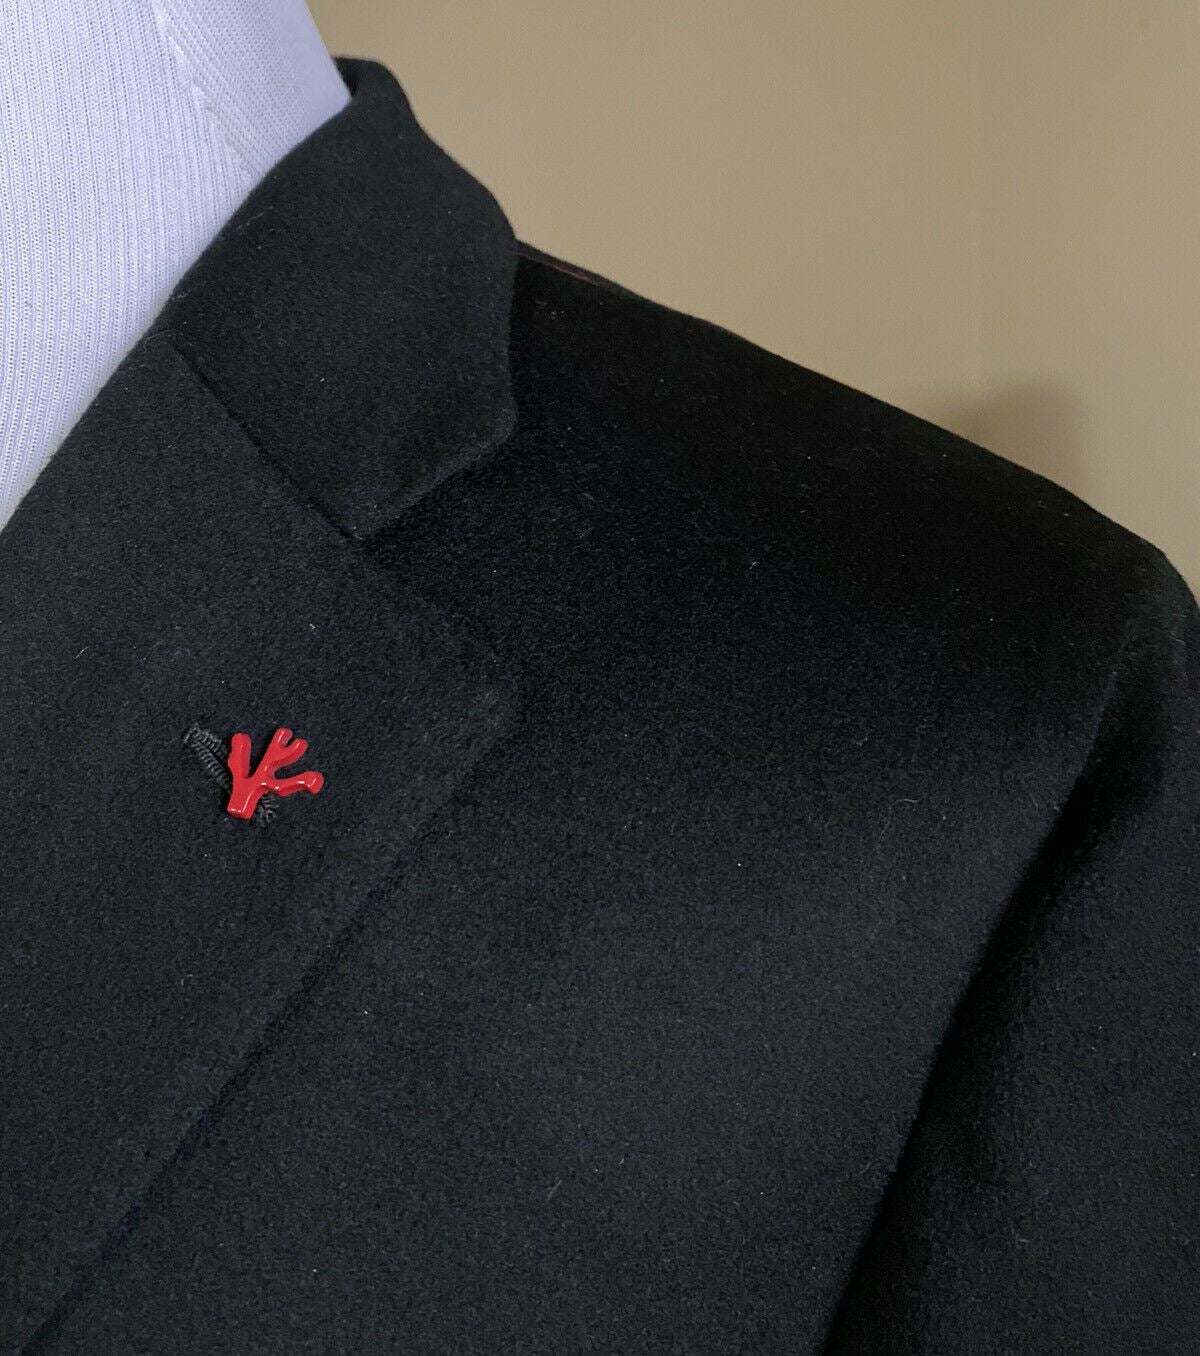 New $4200 Isaia Men’s Overcoat Coat Black Size 42R US ( 52R Eu ) Italy